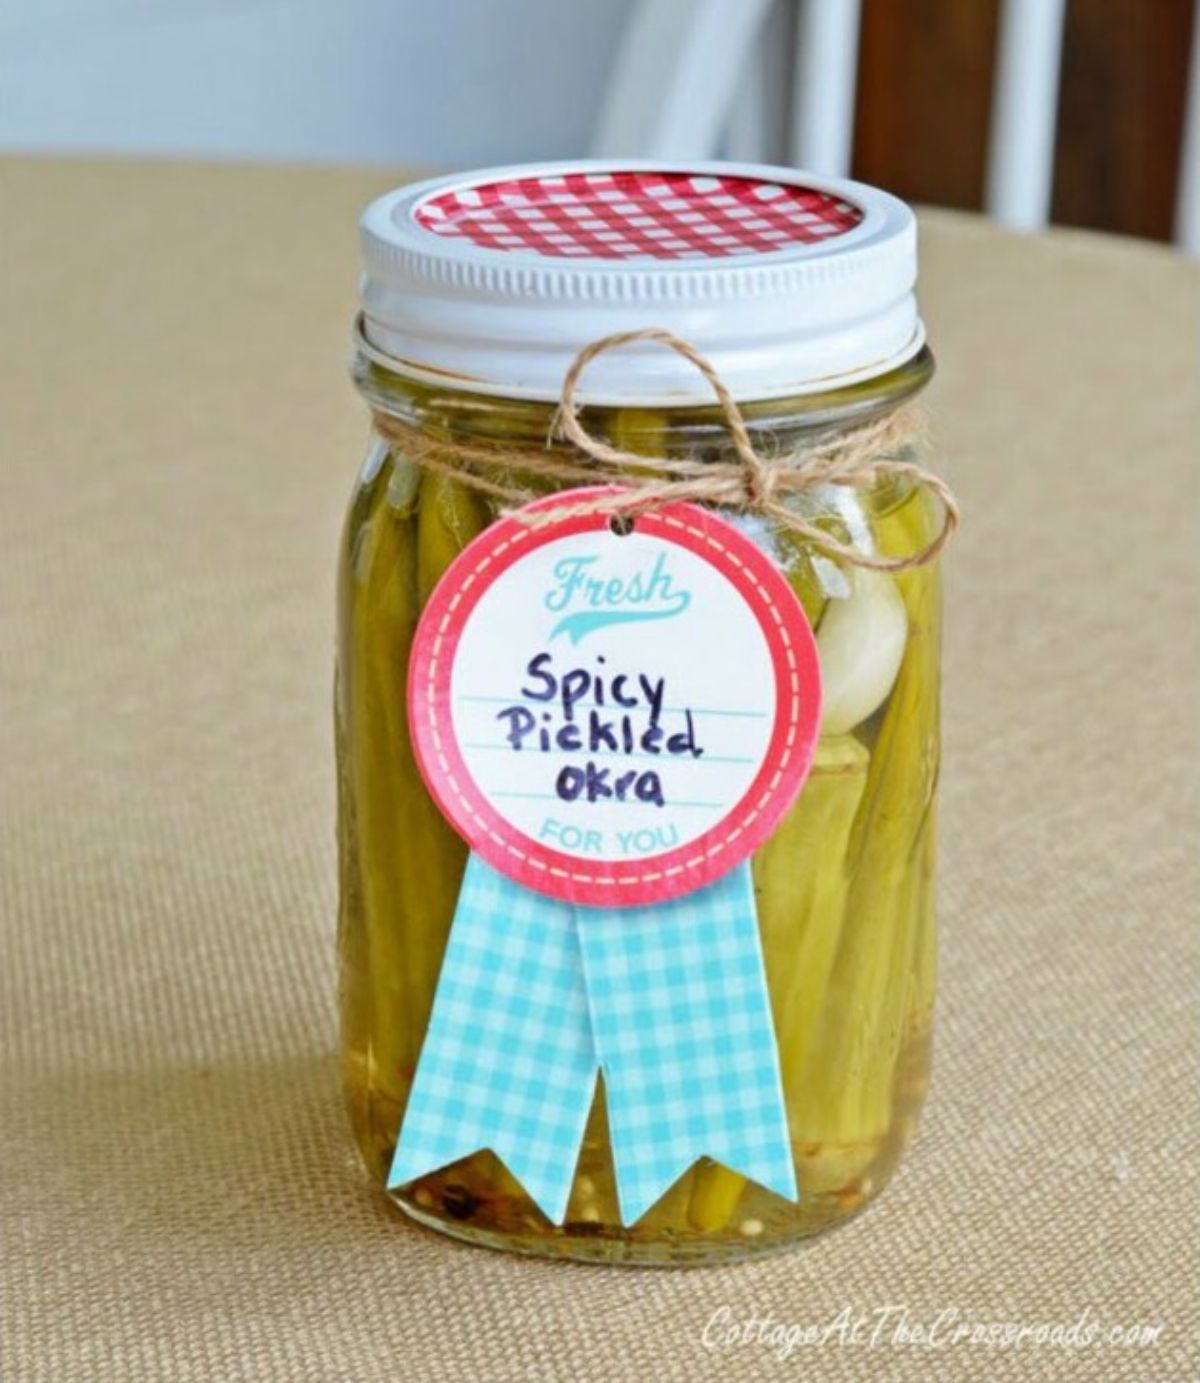 Spicy pickled okra in a glass jar.